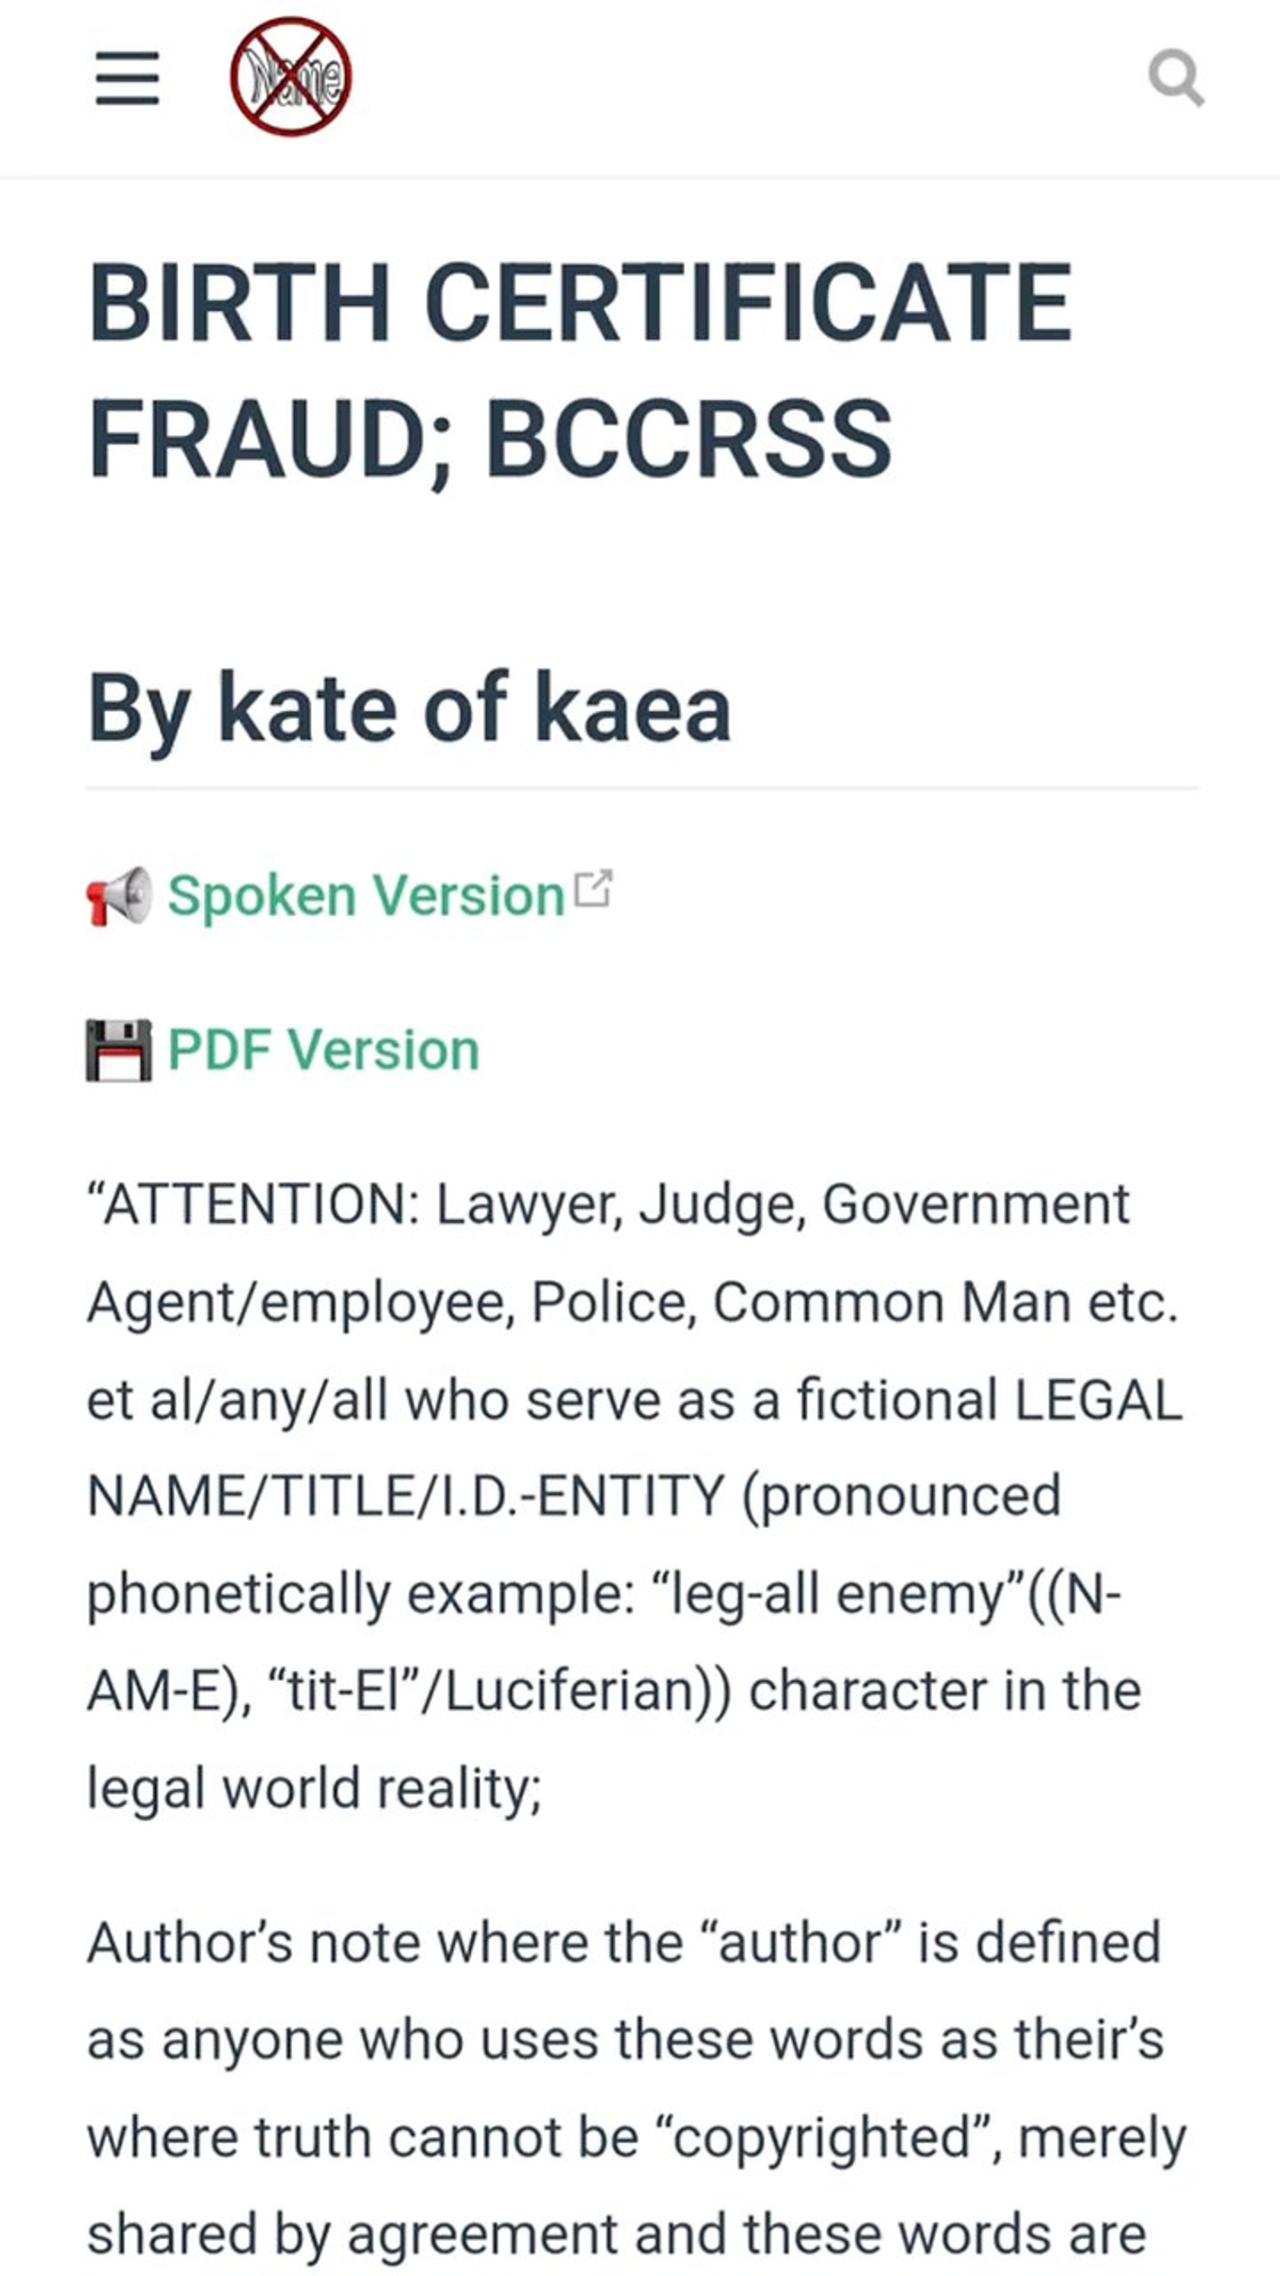 KATE OF KAEA